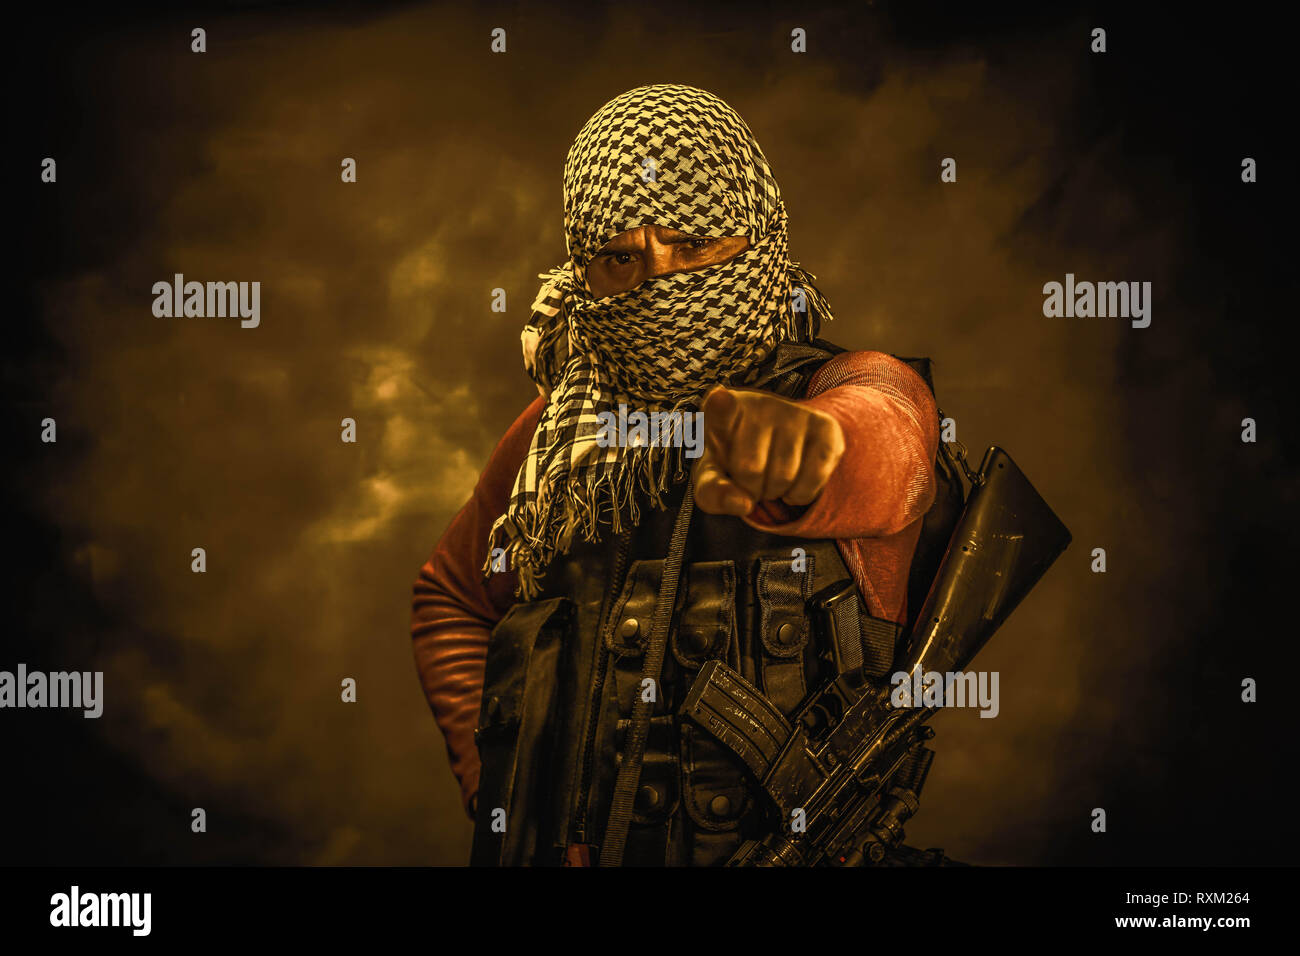 rebel militant terrorist guerrilla concept Stock Photo